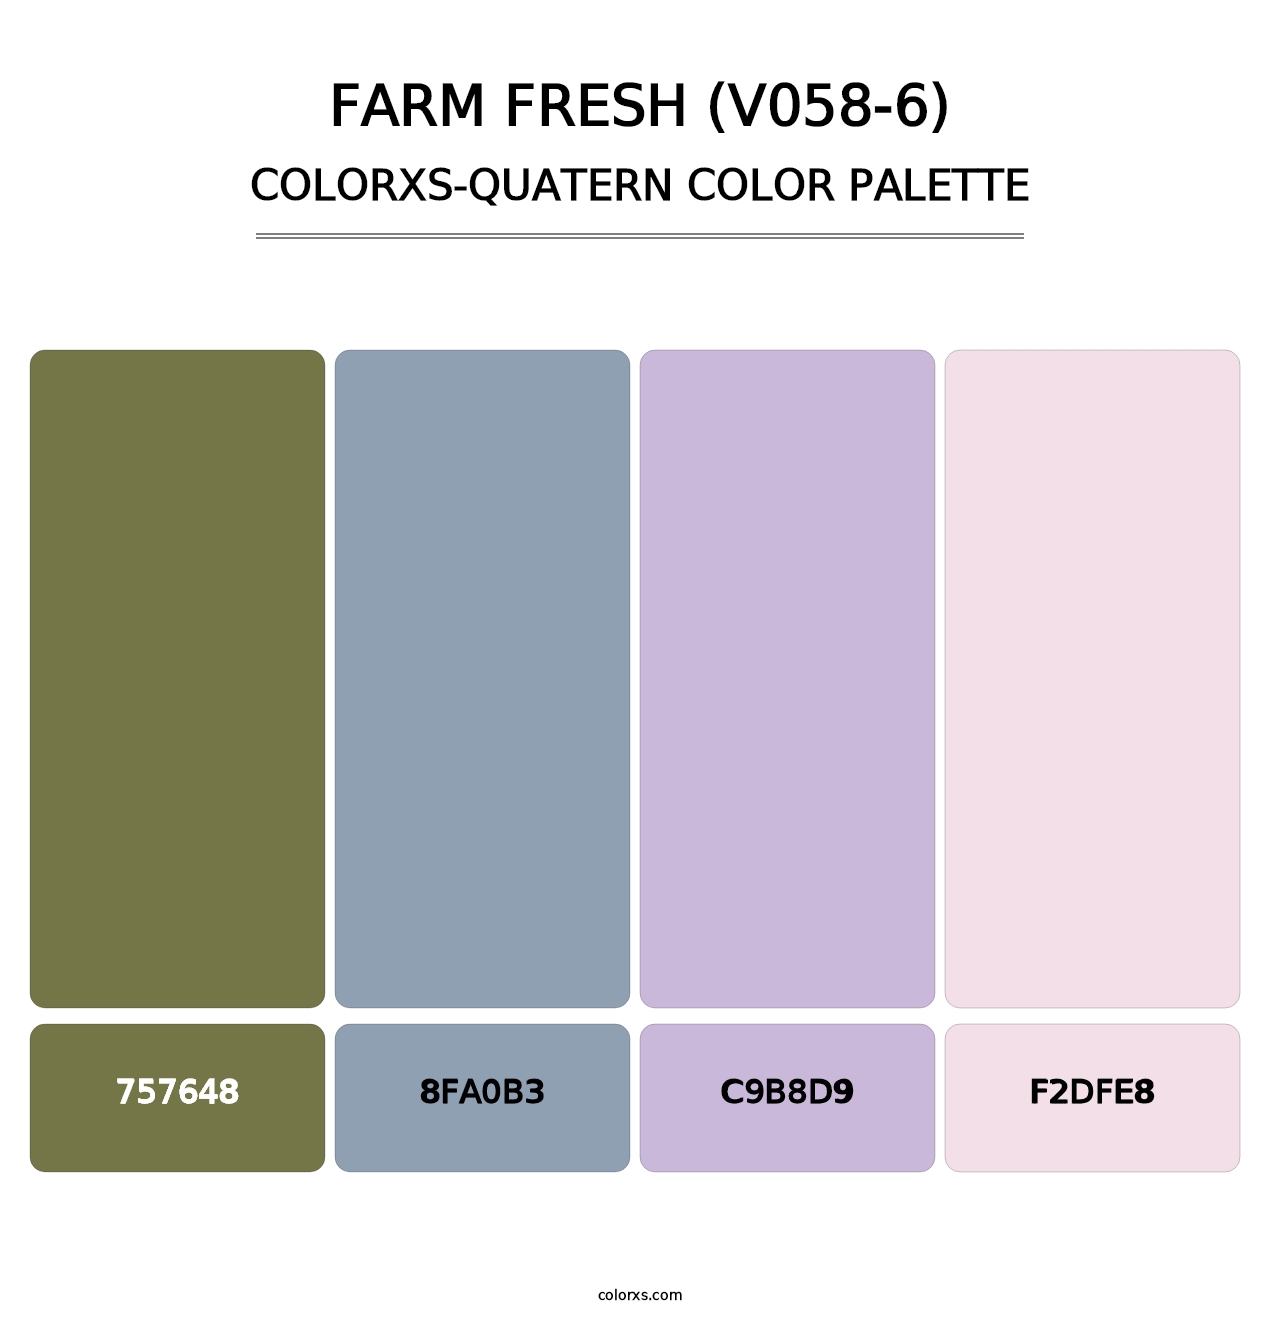 Farm Fresh (V058-6) - Colorxs Quatern Palette